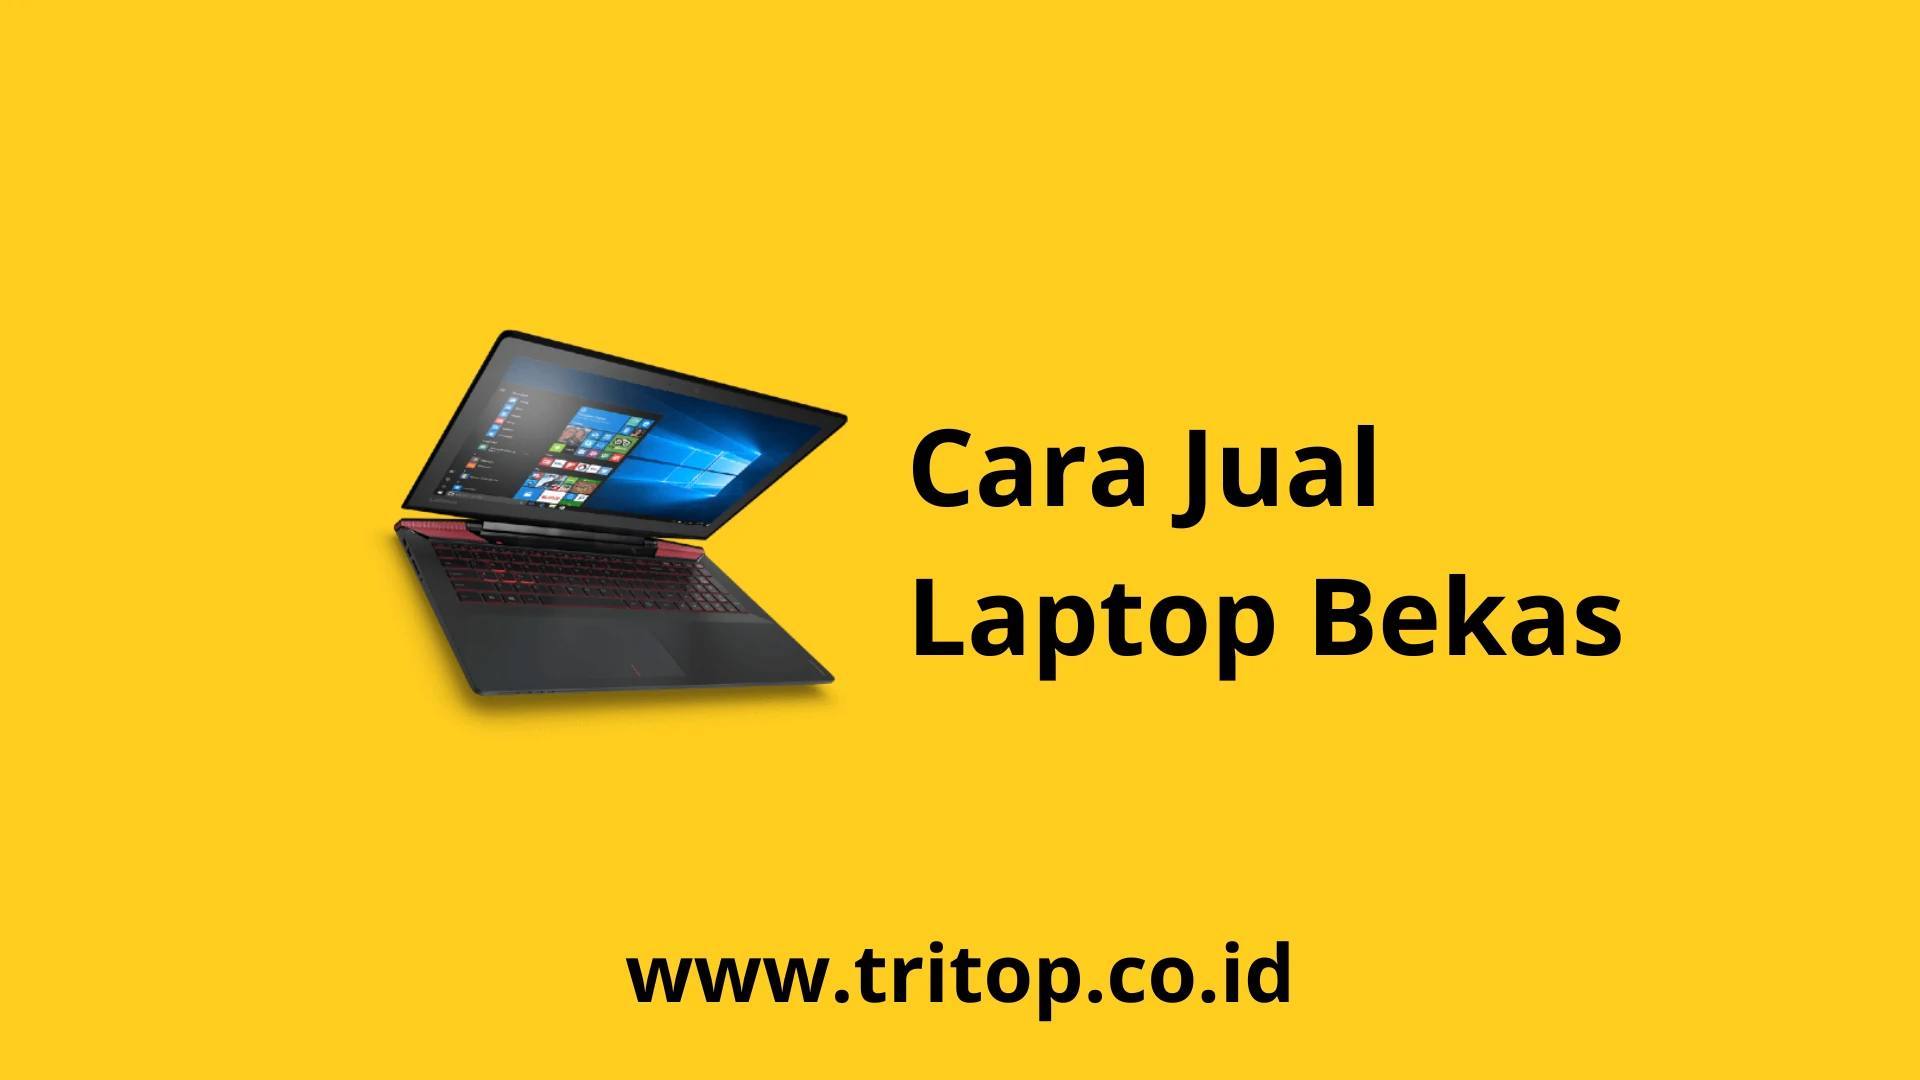 Cara Jual Laptop Bekas Tritop.co.id